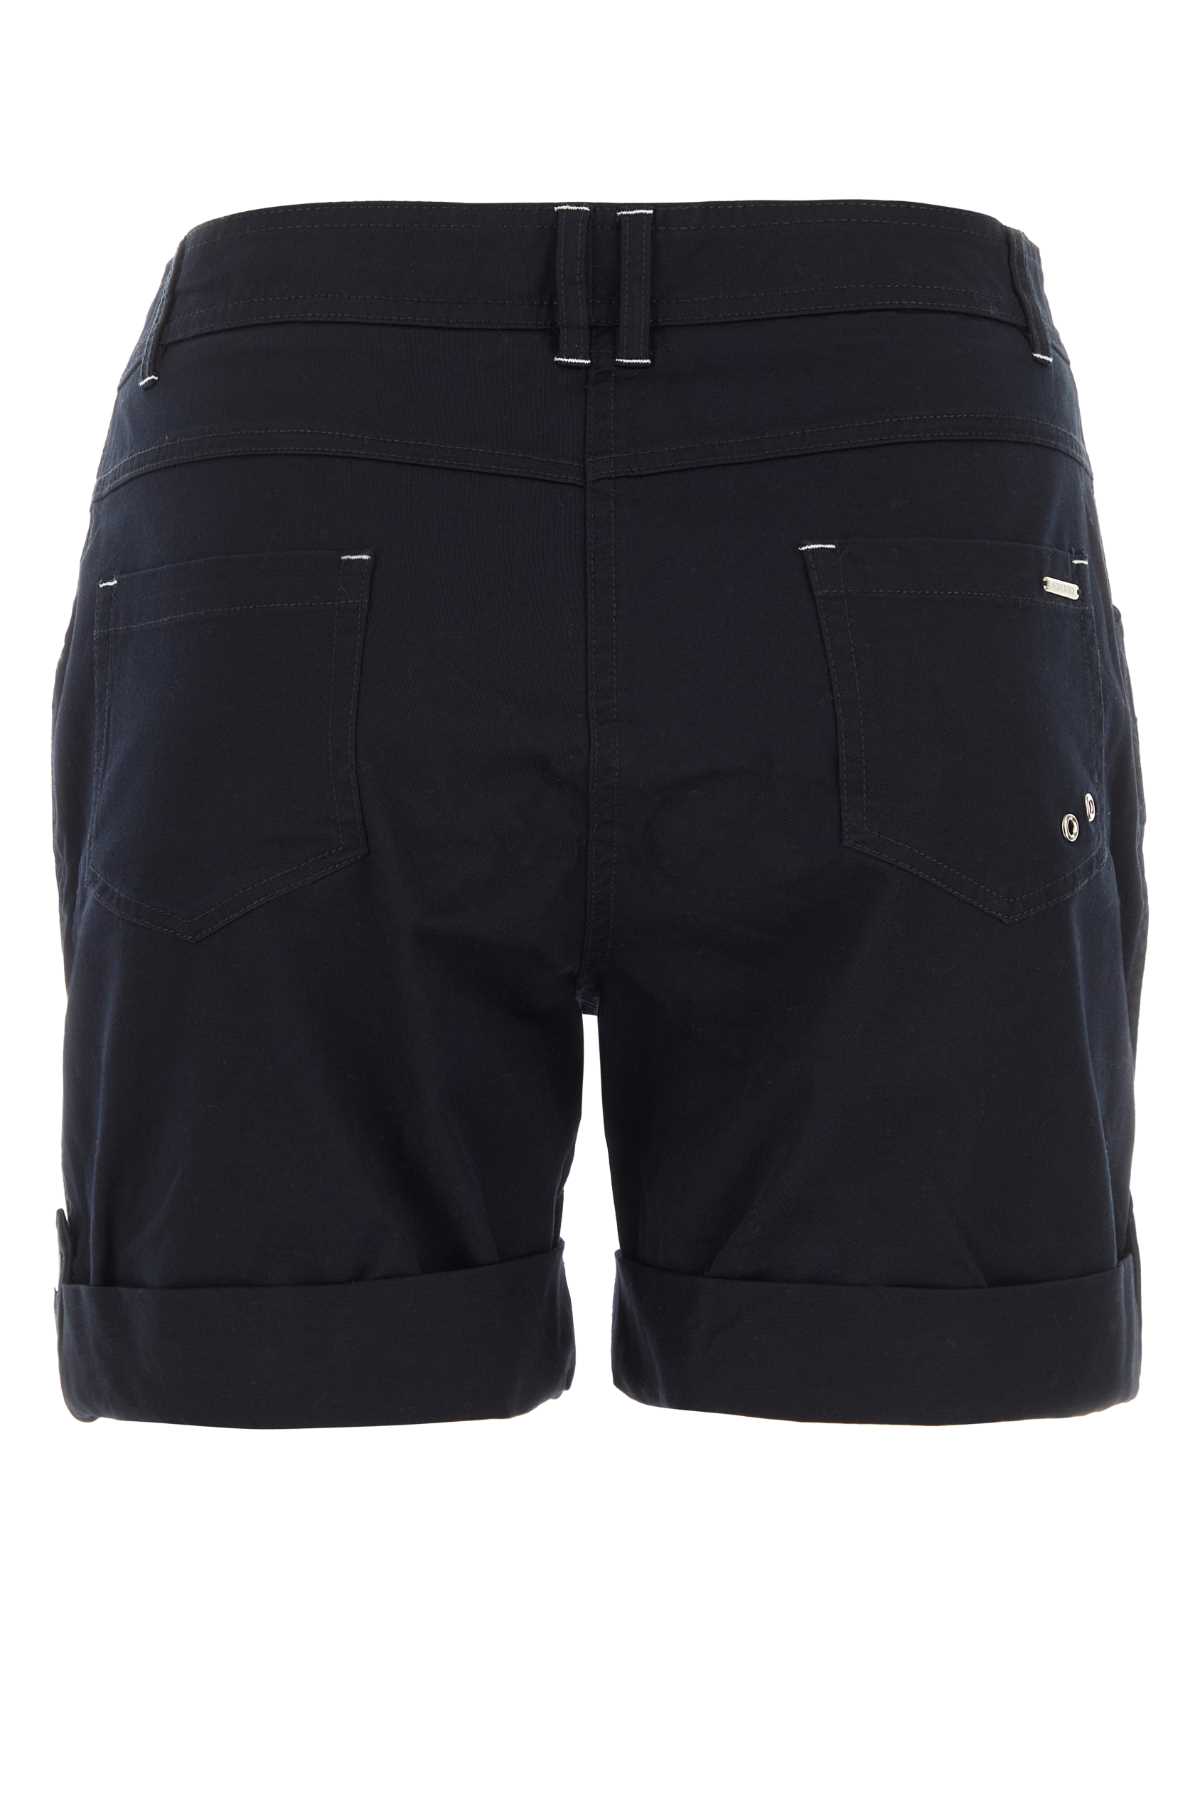 Saint James Midnight Blue Stretch Cotton Shorts In Navy